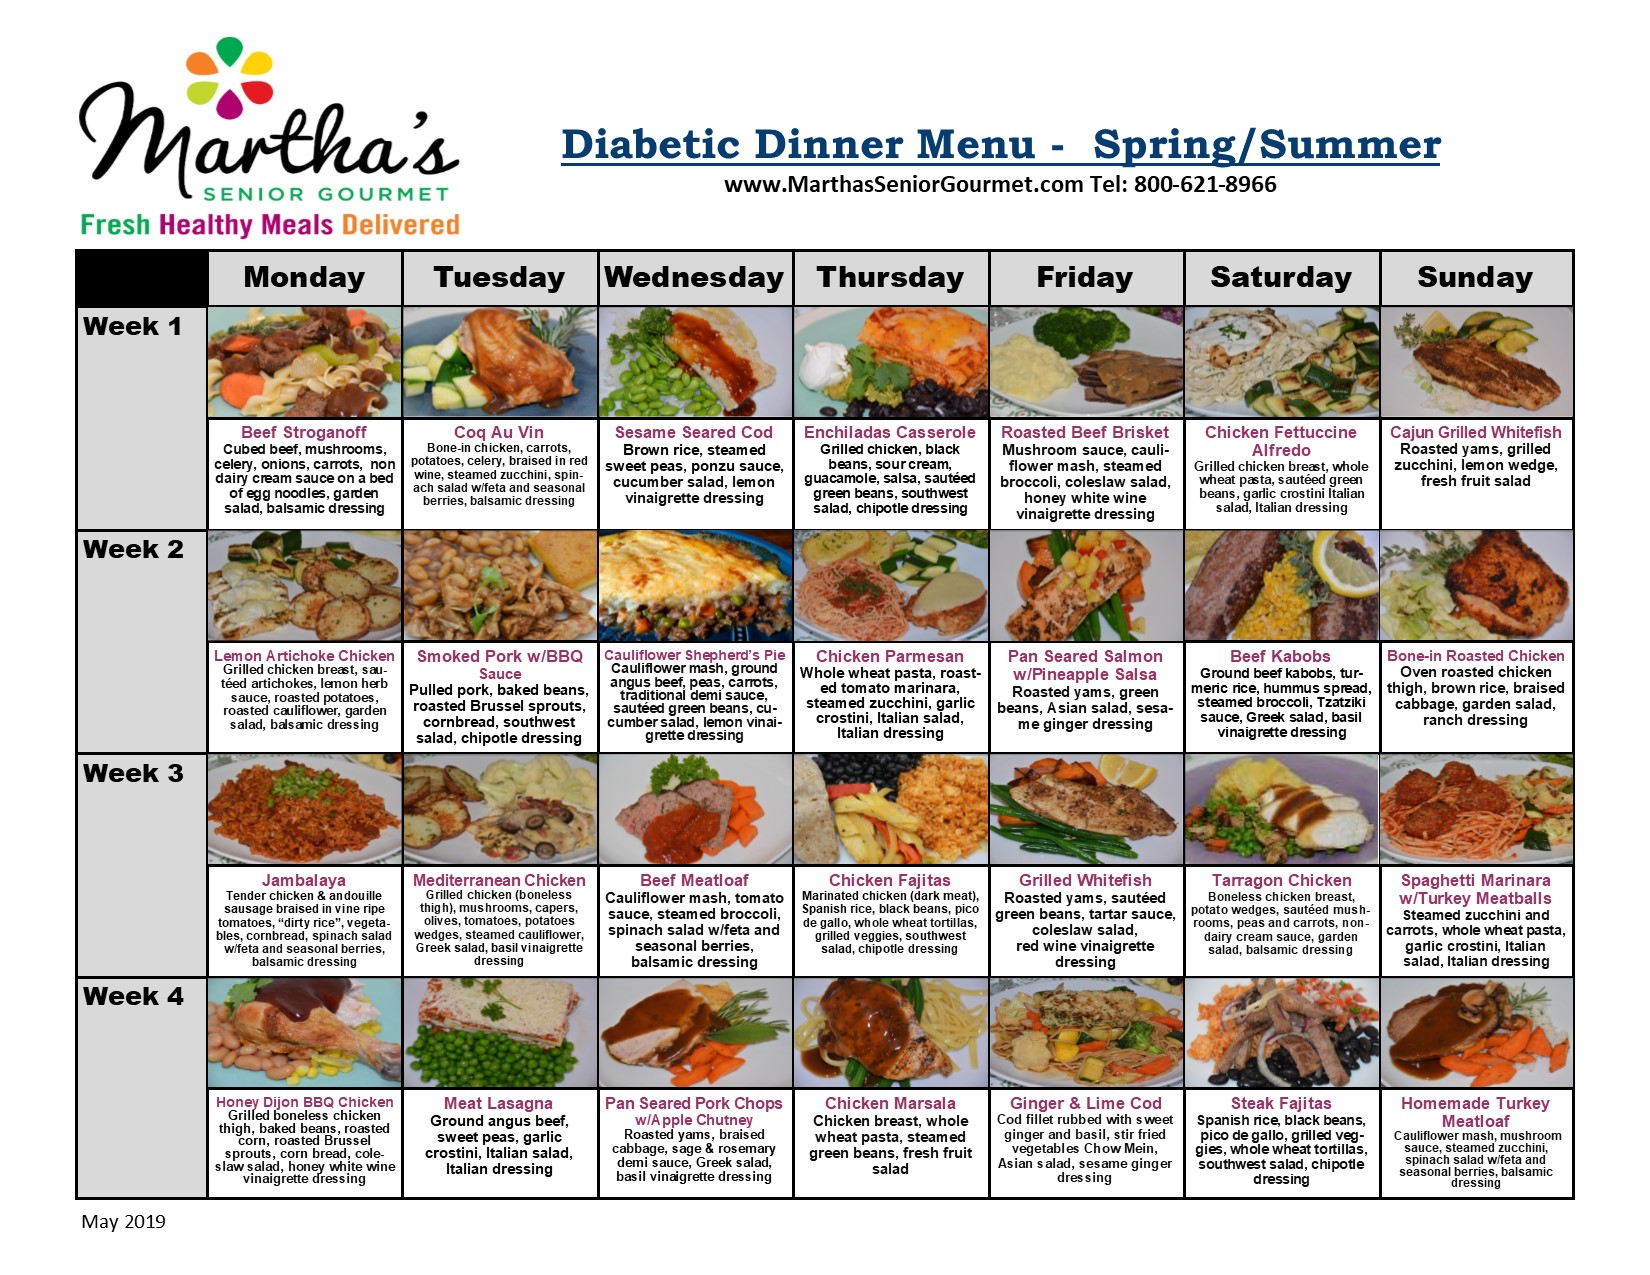 diabetic meal chart plan